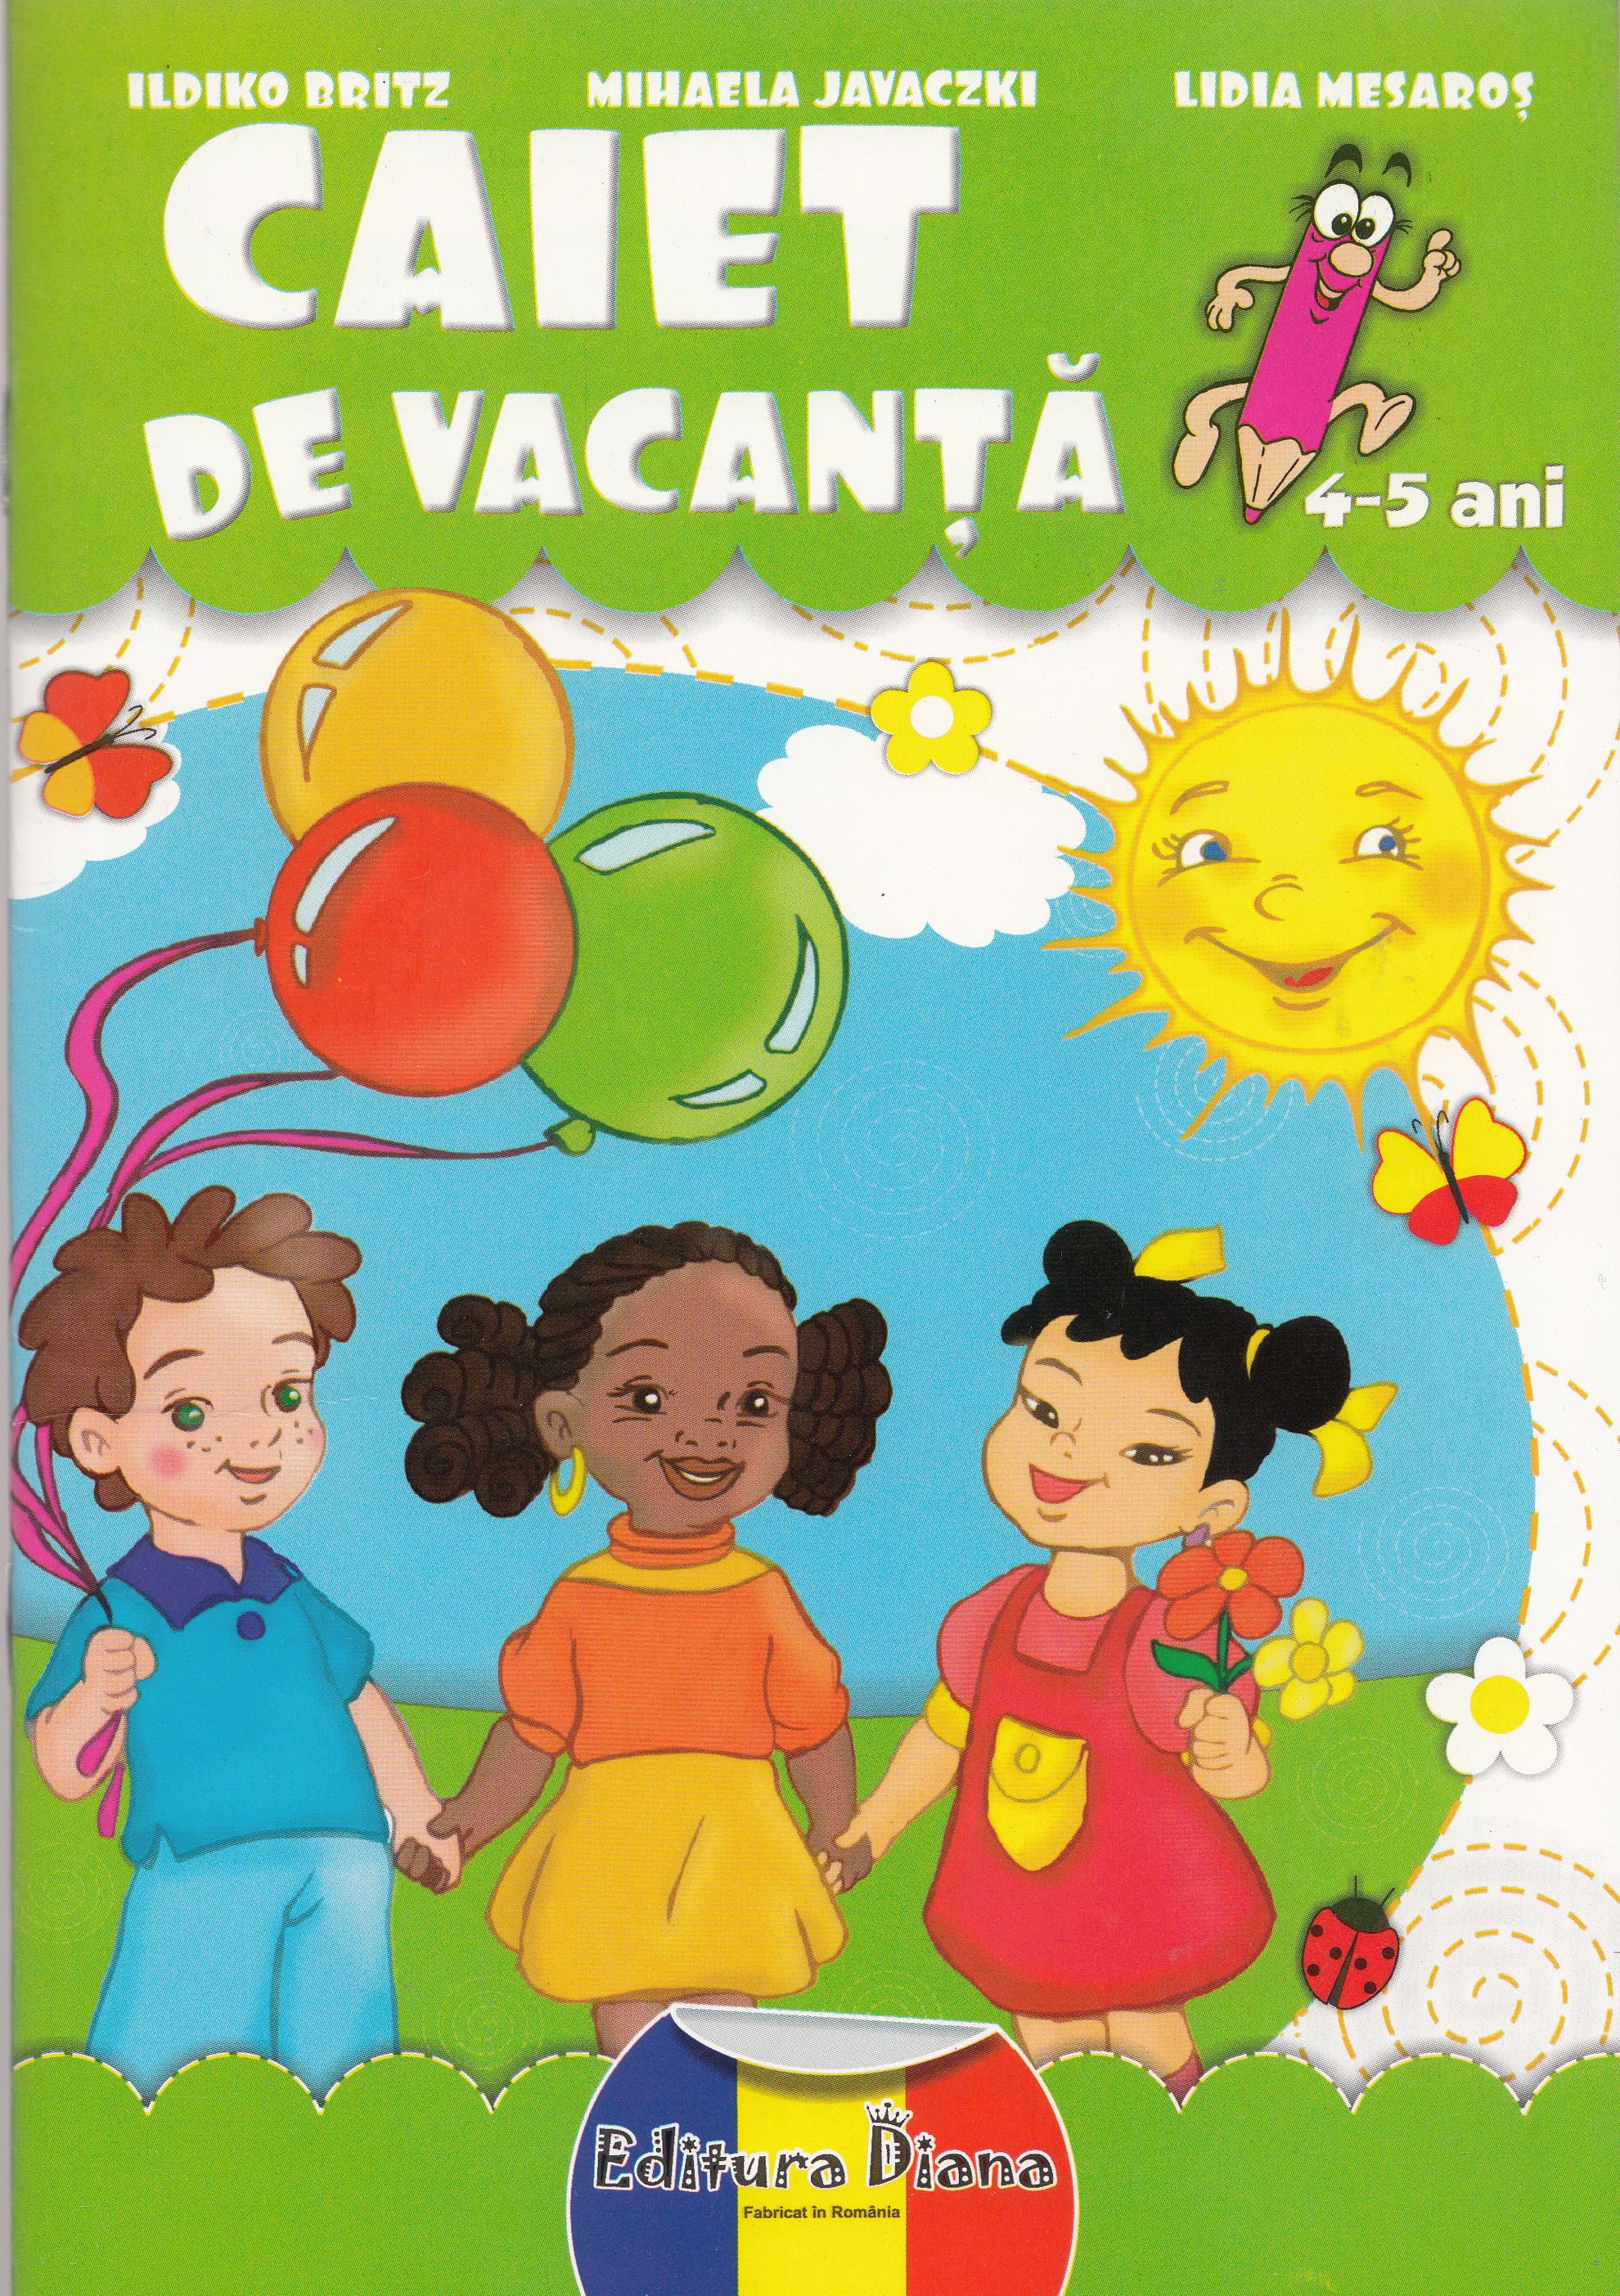 Caiet de vacanta 4-5 ani - Mihaela Javaczki, Ildiko Britz, Lidia Mesaros